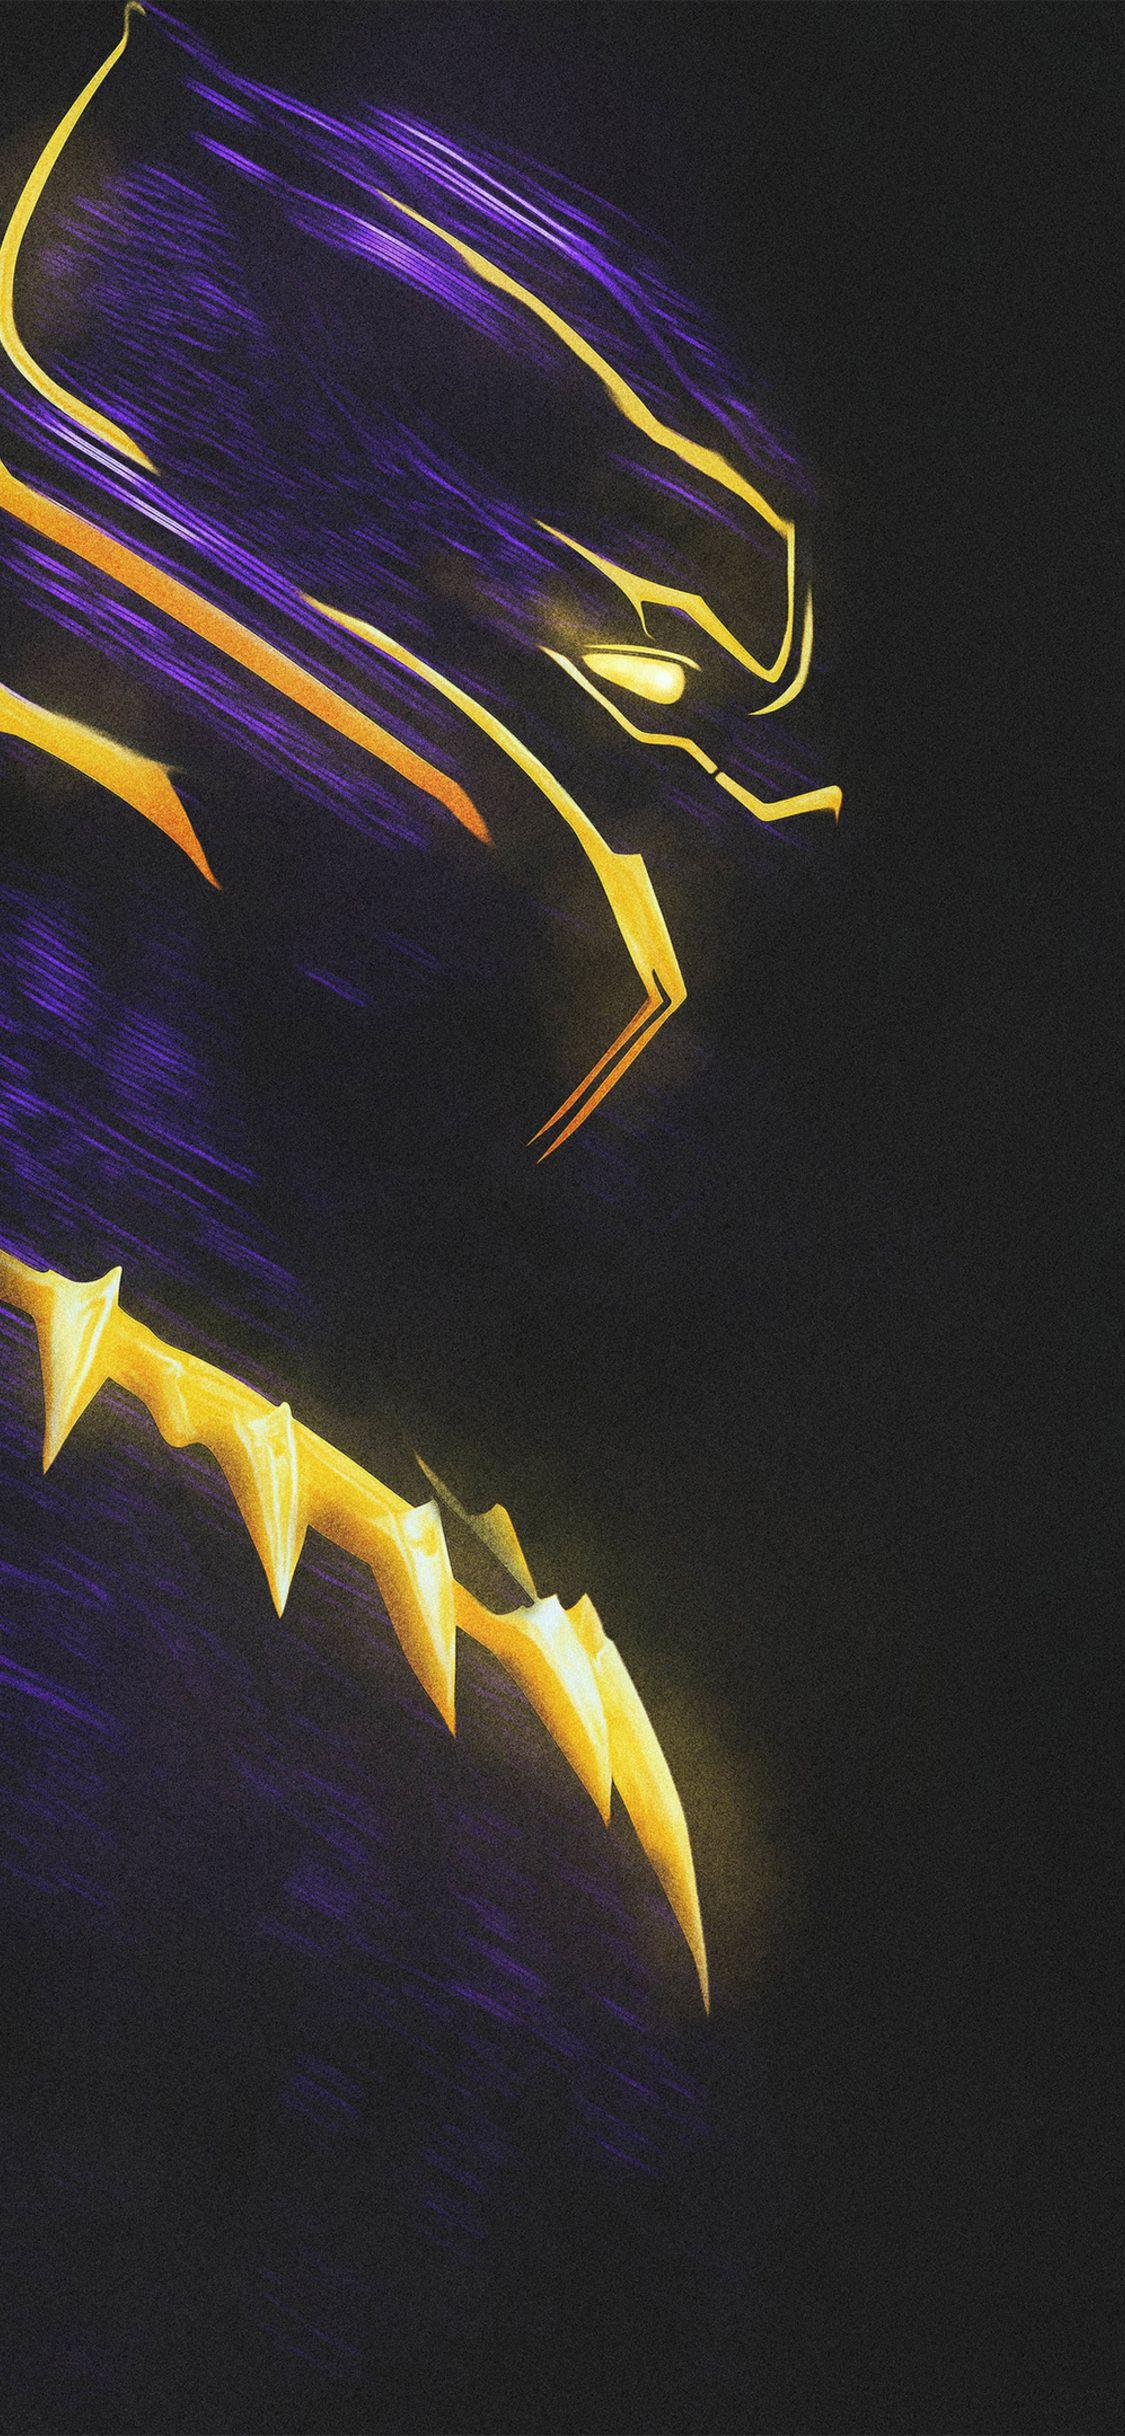 Erik Killmonger Black Panther Art iPhone X. Black panther art